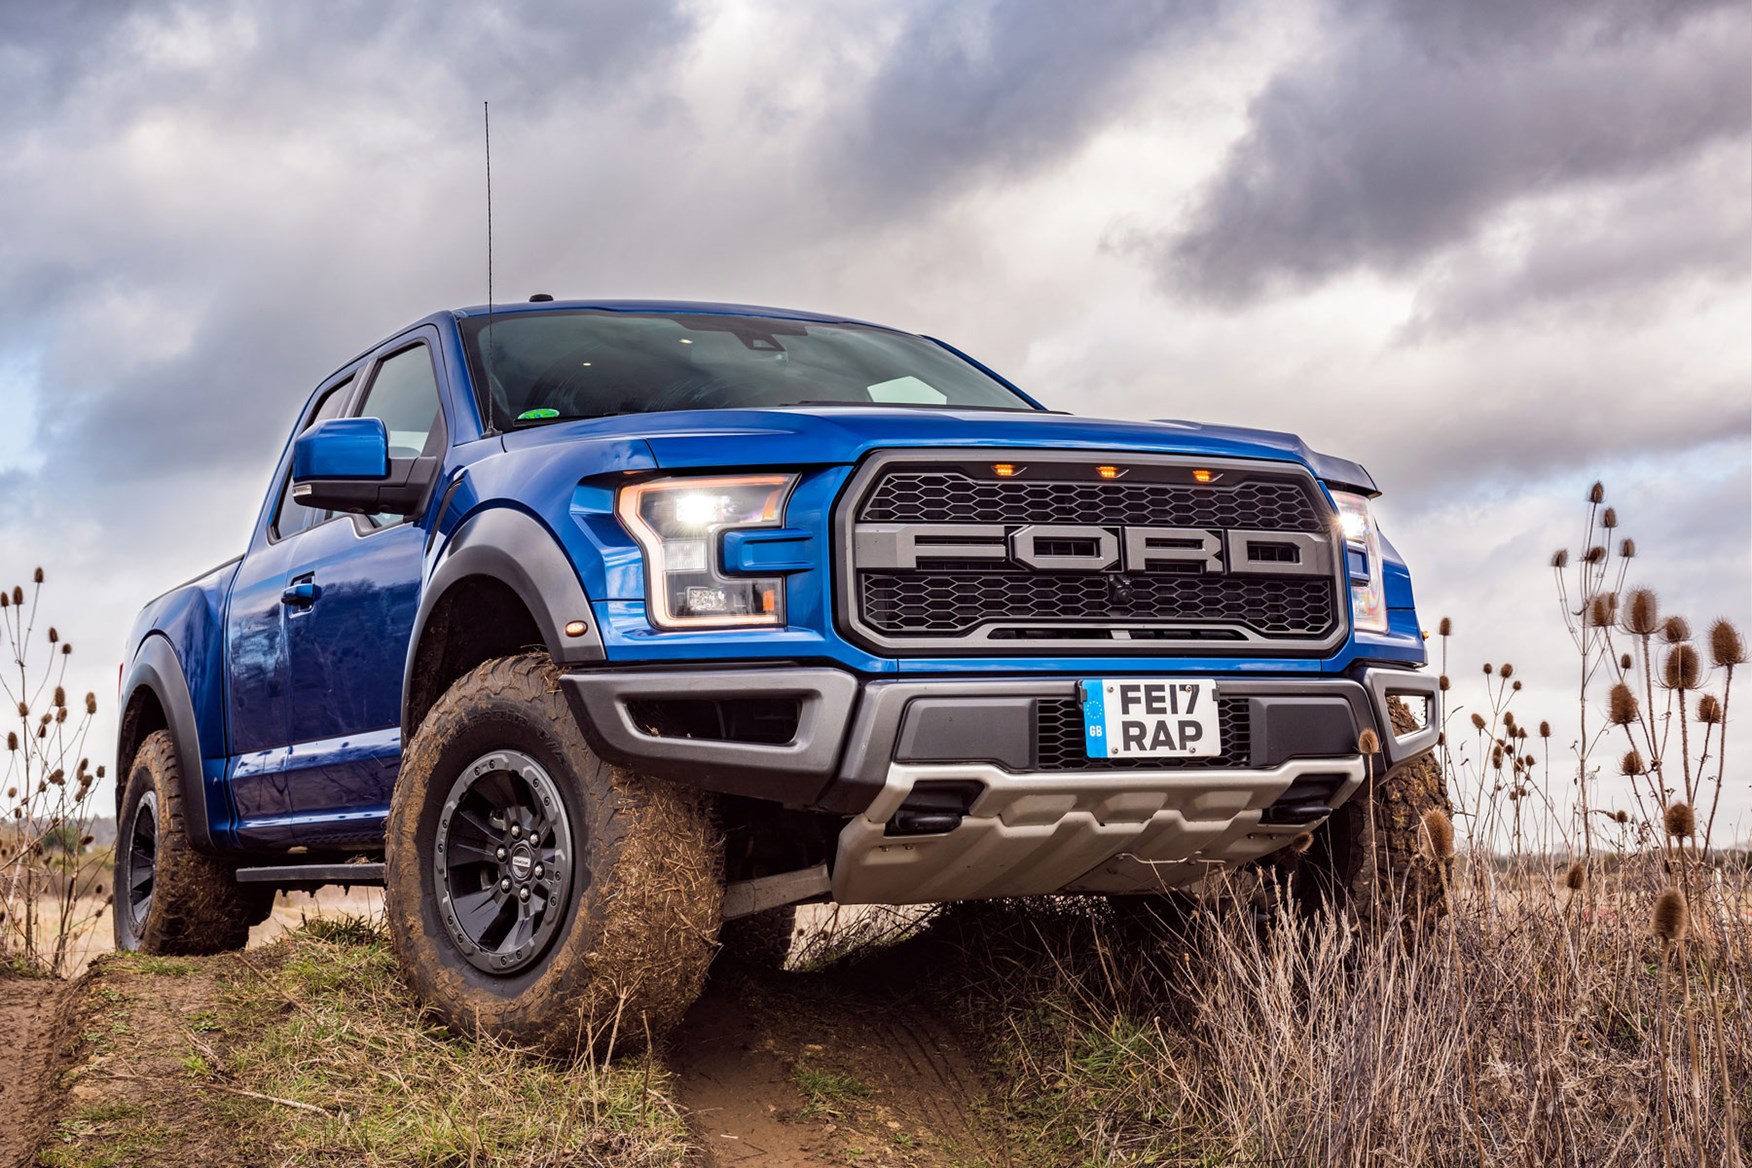 Ford F150 Raptor review taking highperformance pickups